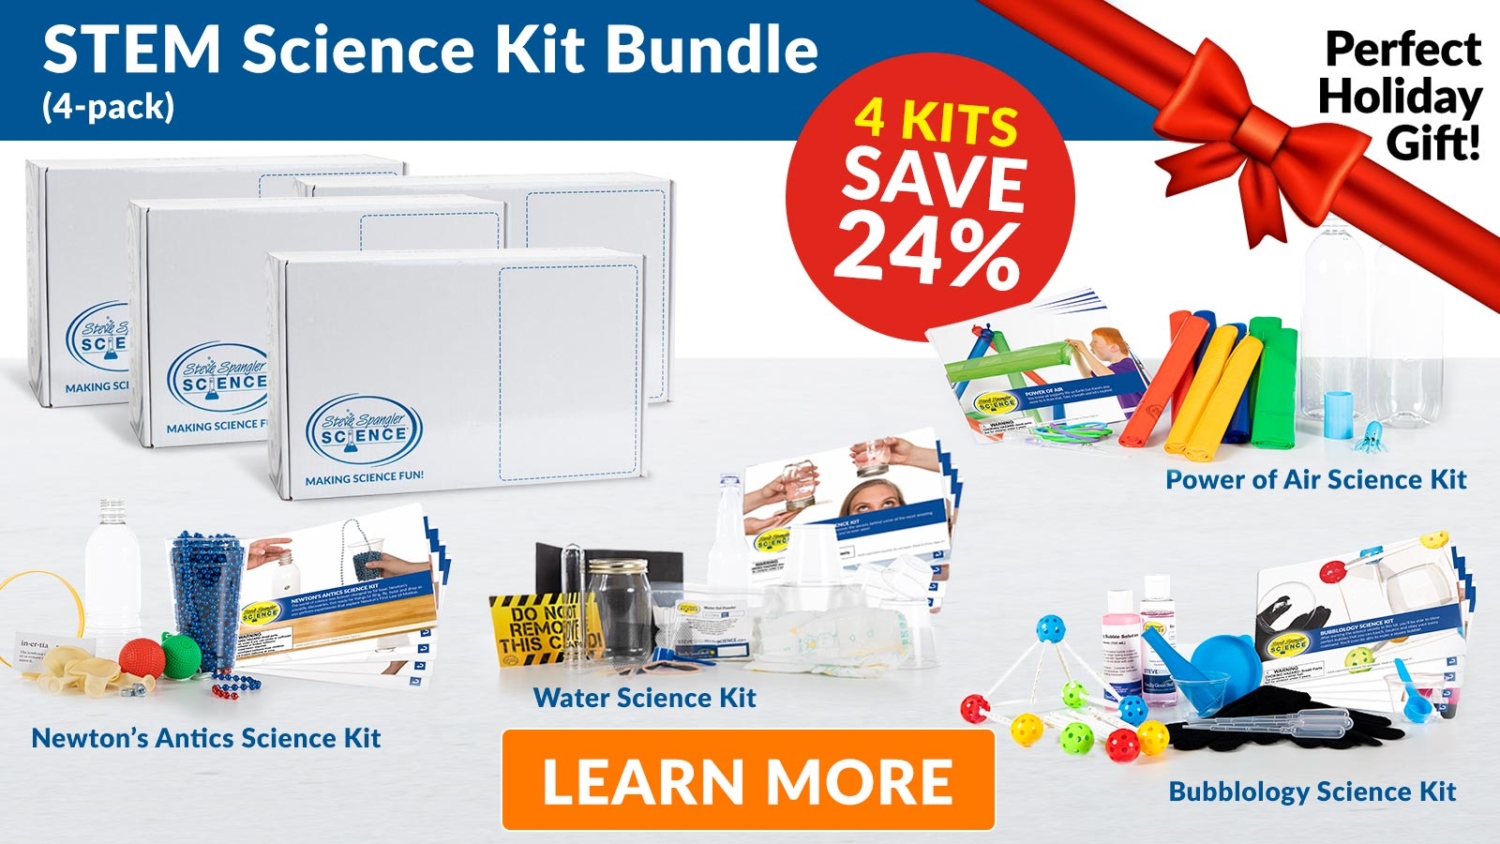 STEM Science Kit - Bundle 4-pack